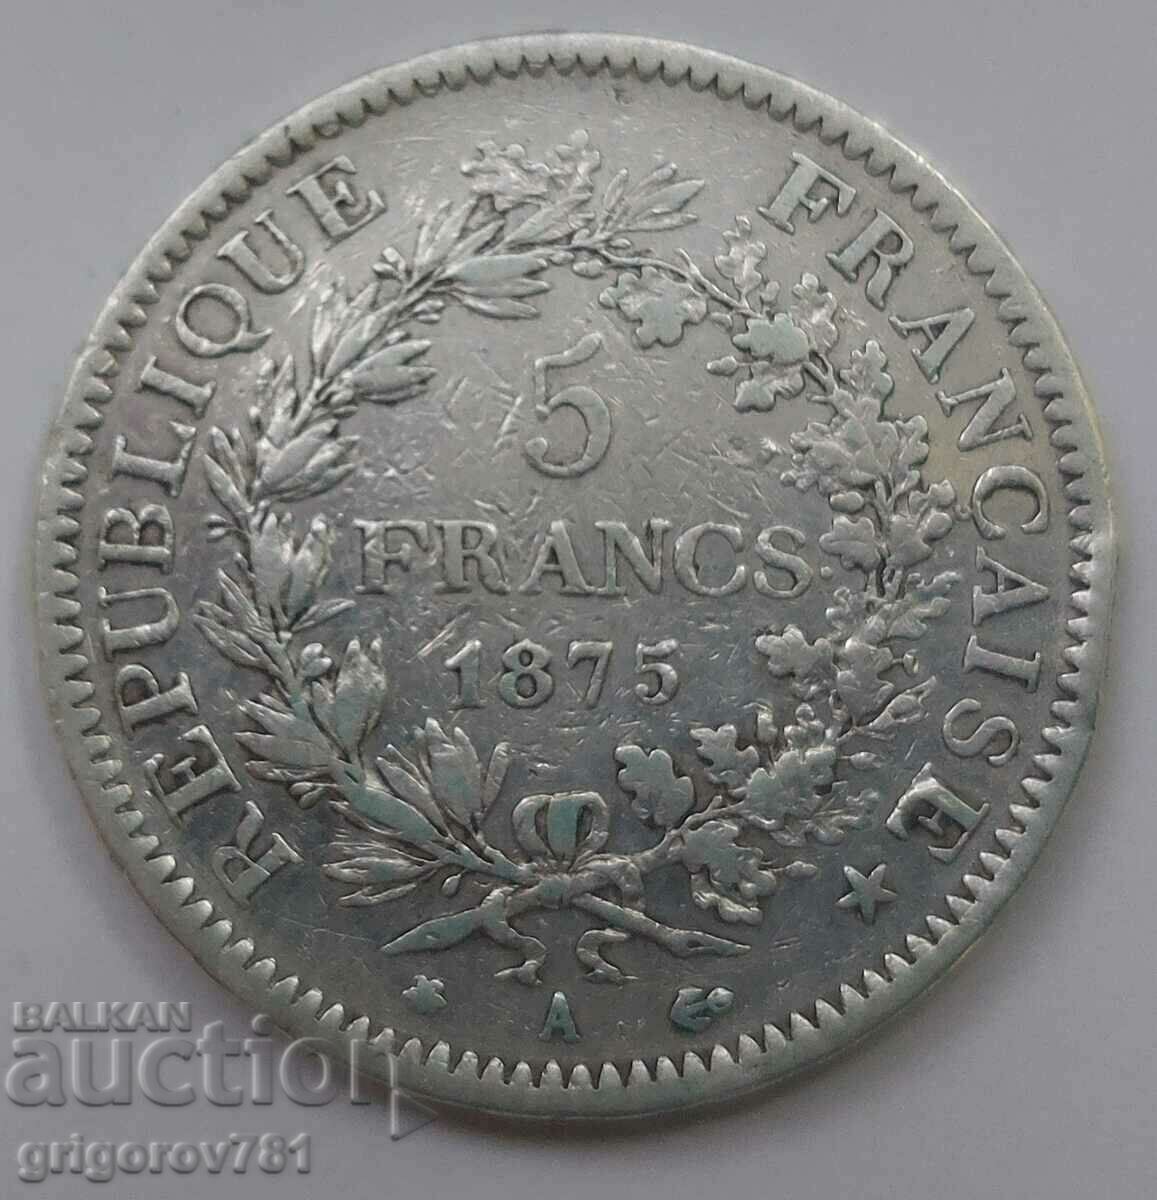 5 Francs Silver France 1876 A - Silver Coin #91